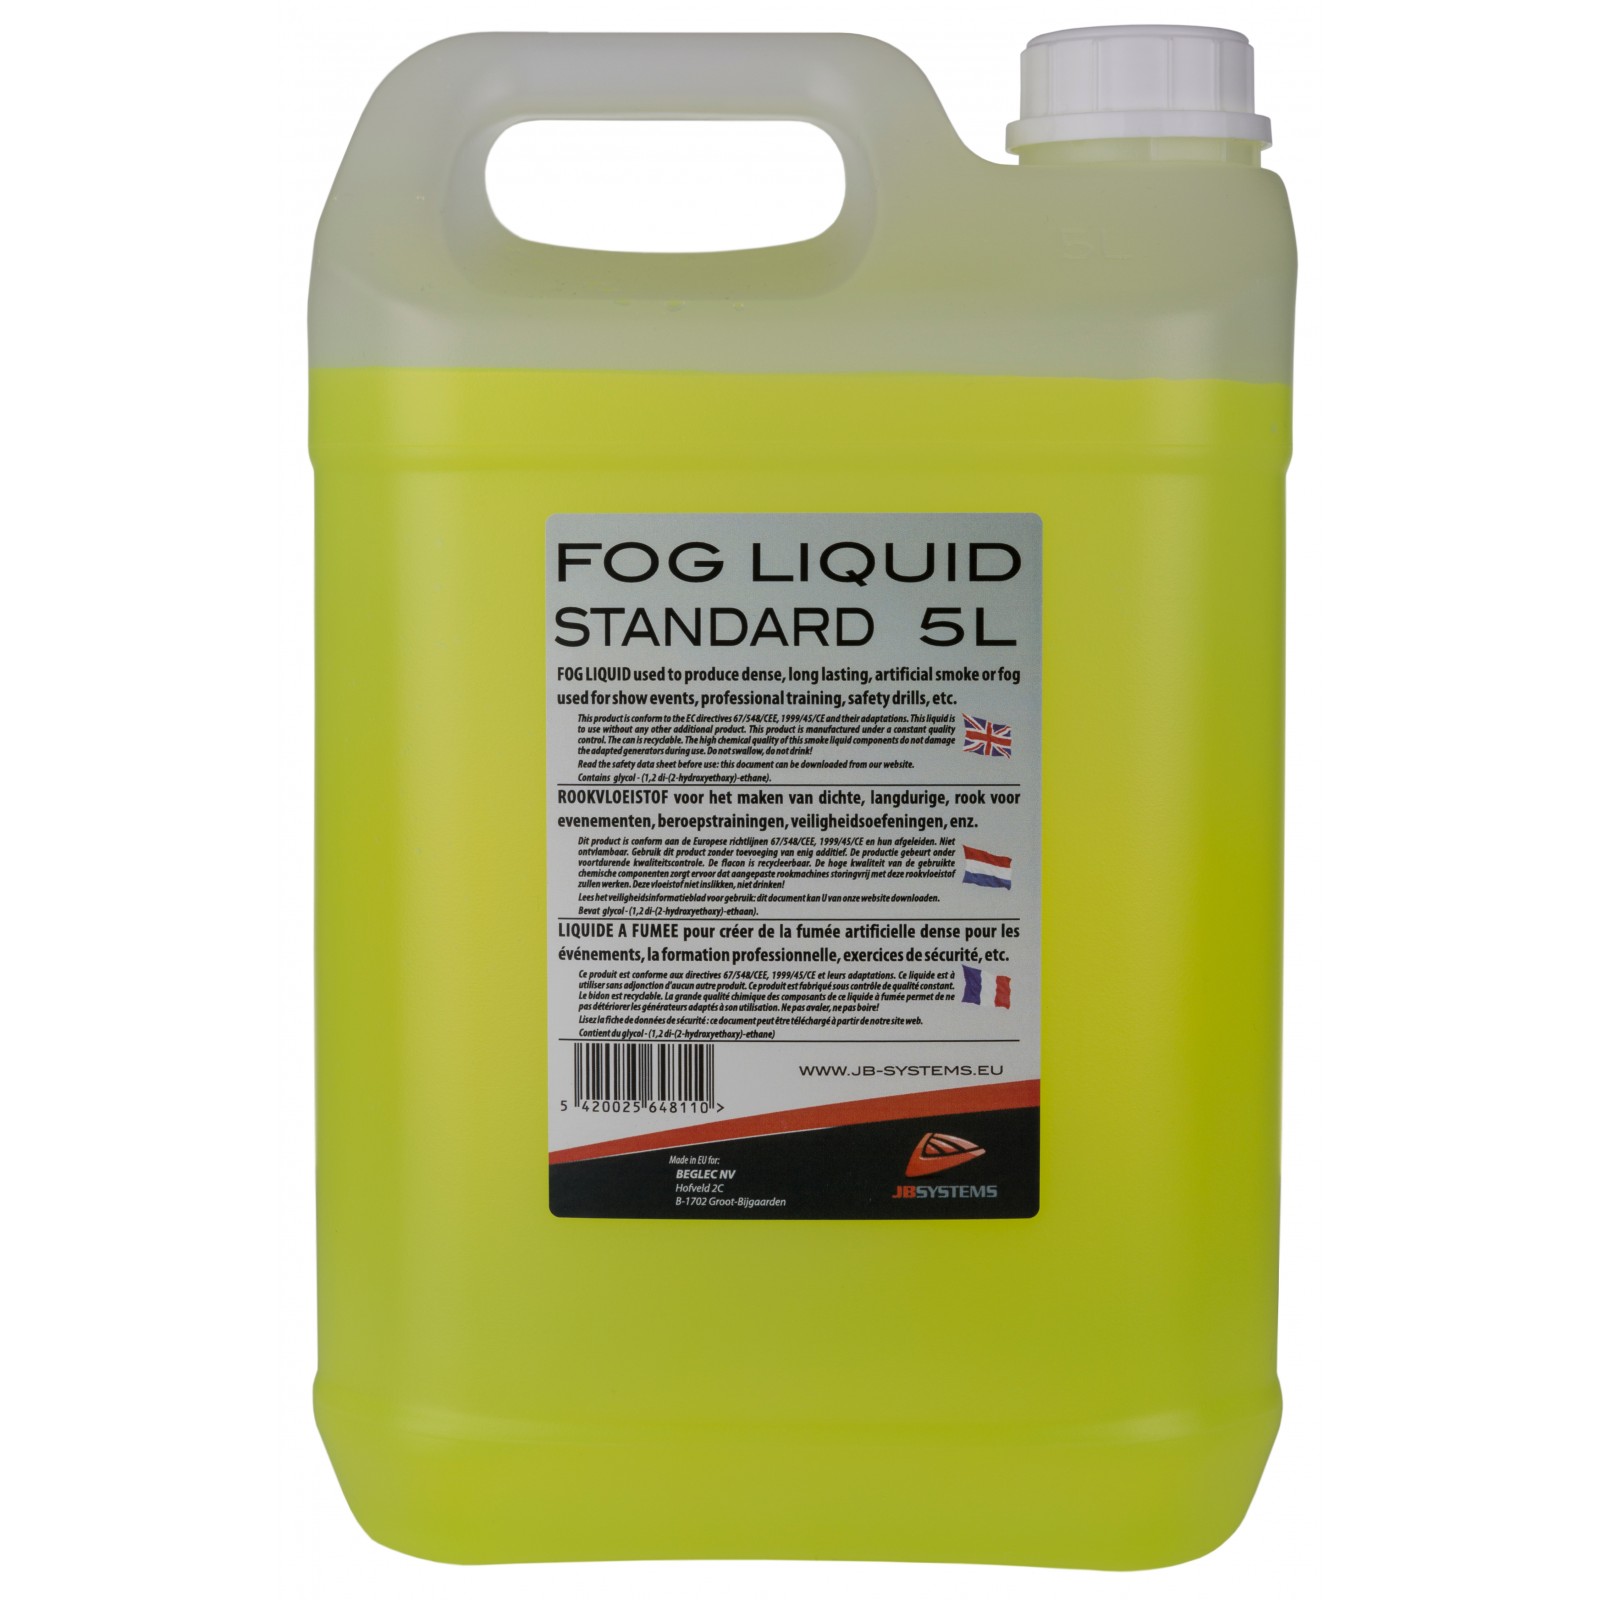 Fog Liquid  STD 5liter,LIQUIDE POUR MACHINE A FUMEE 5L